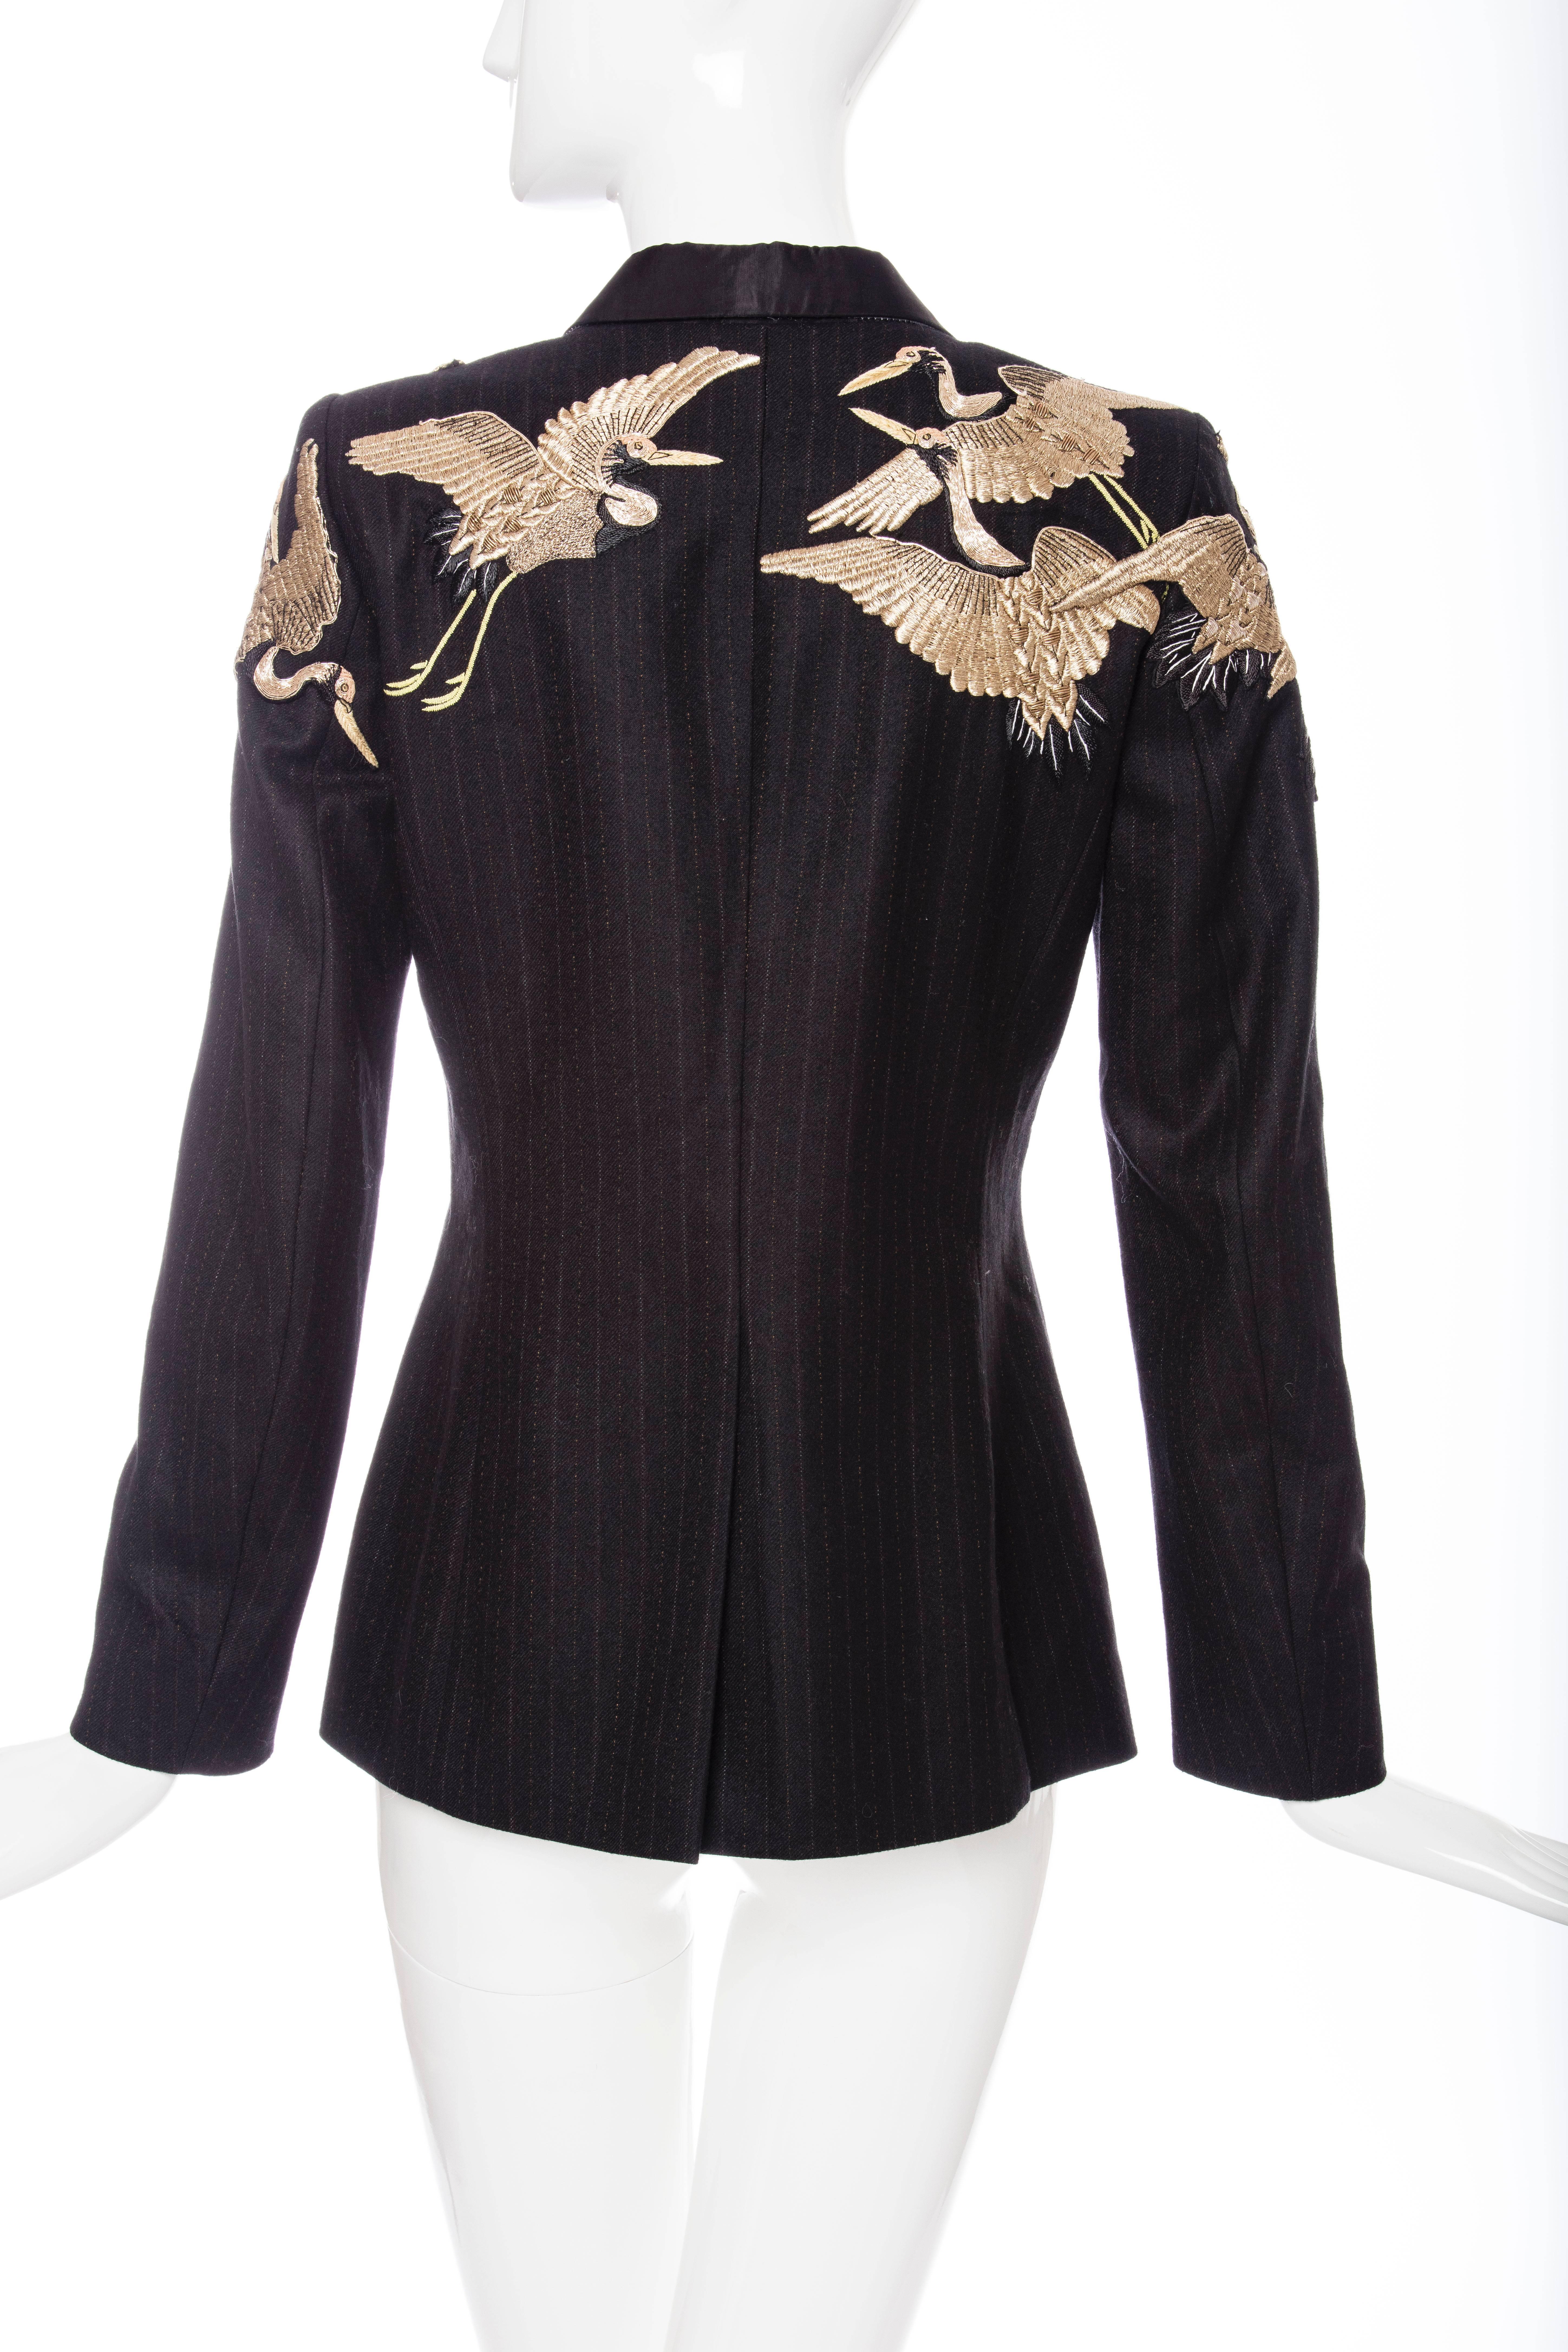 Women's Dries Van Noten Wool Embroidered Blazer, Fall 2012